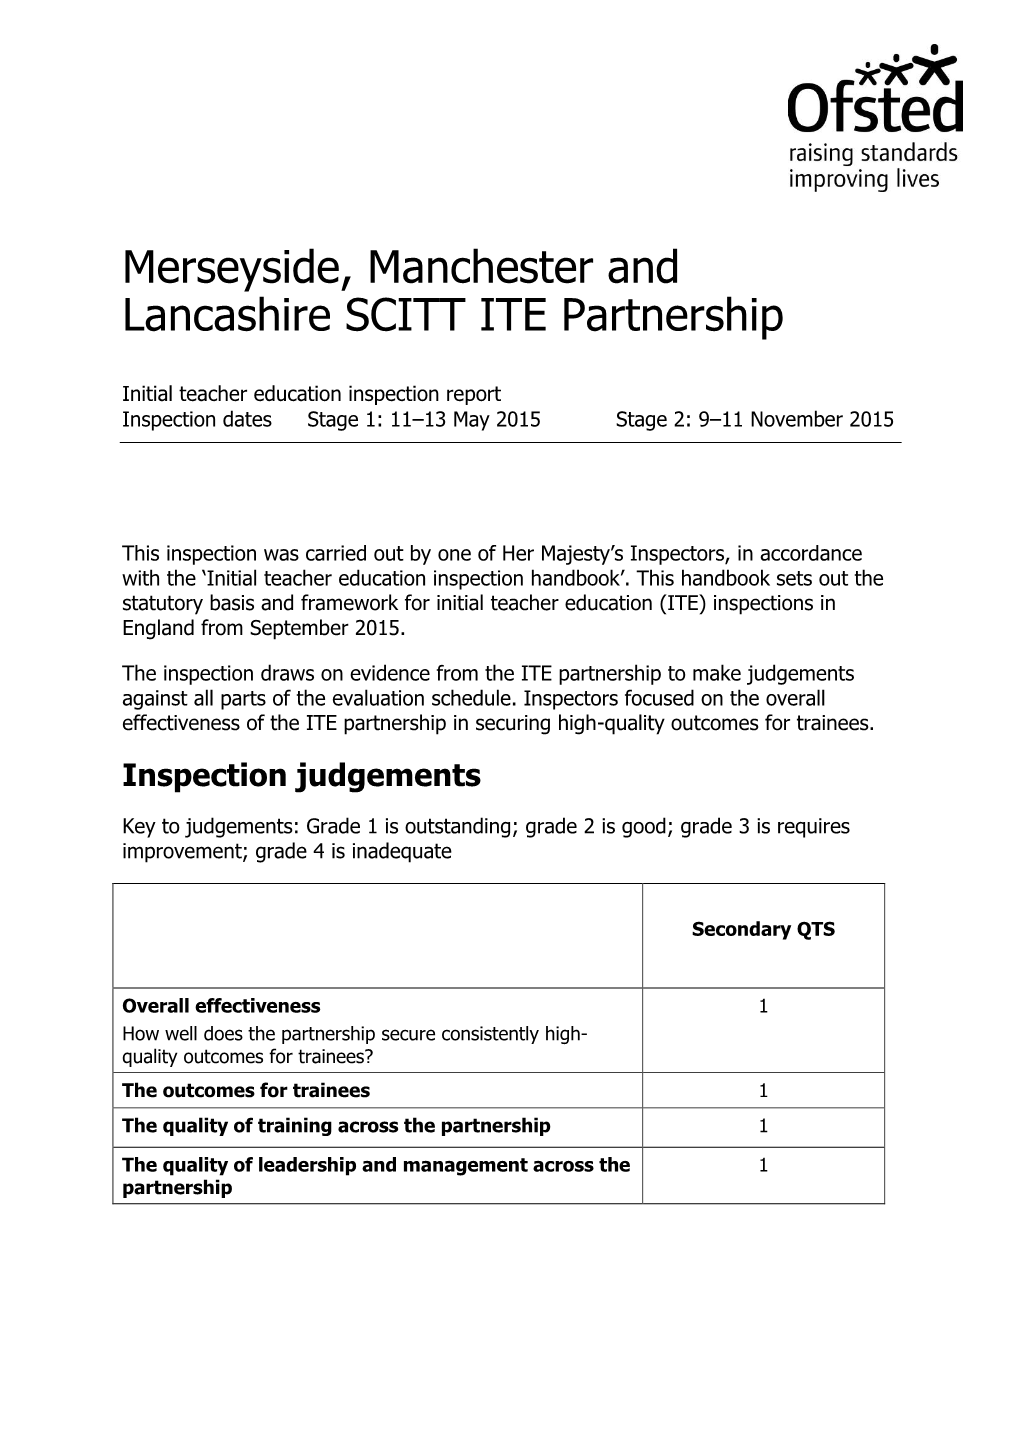 Merseyside, Manchester and Lancashire SCITT ITE Partnership